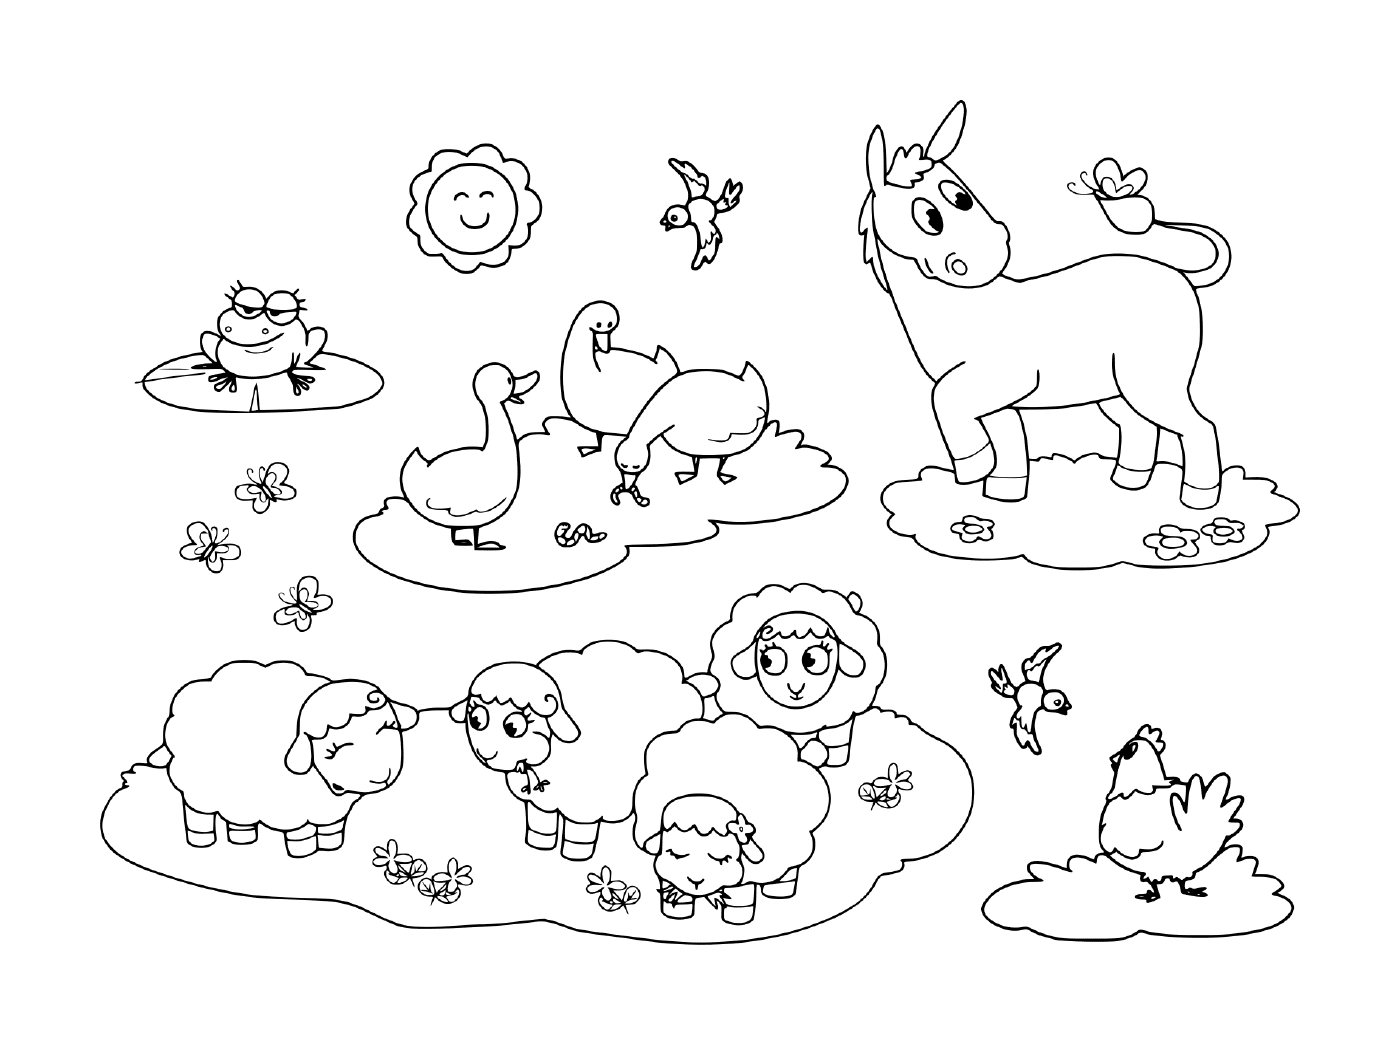  группа животных в траве, включая осла, гуся, курицу, овец и лягушку 